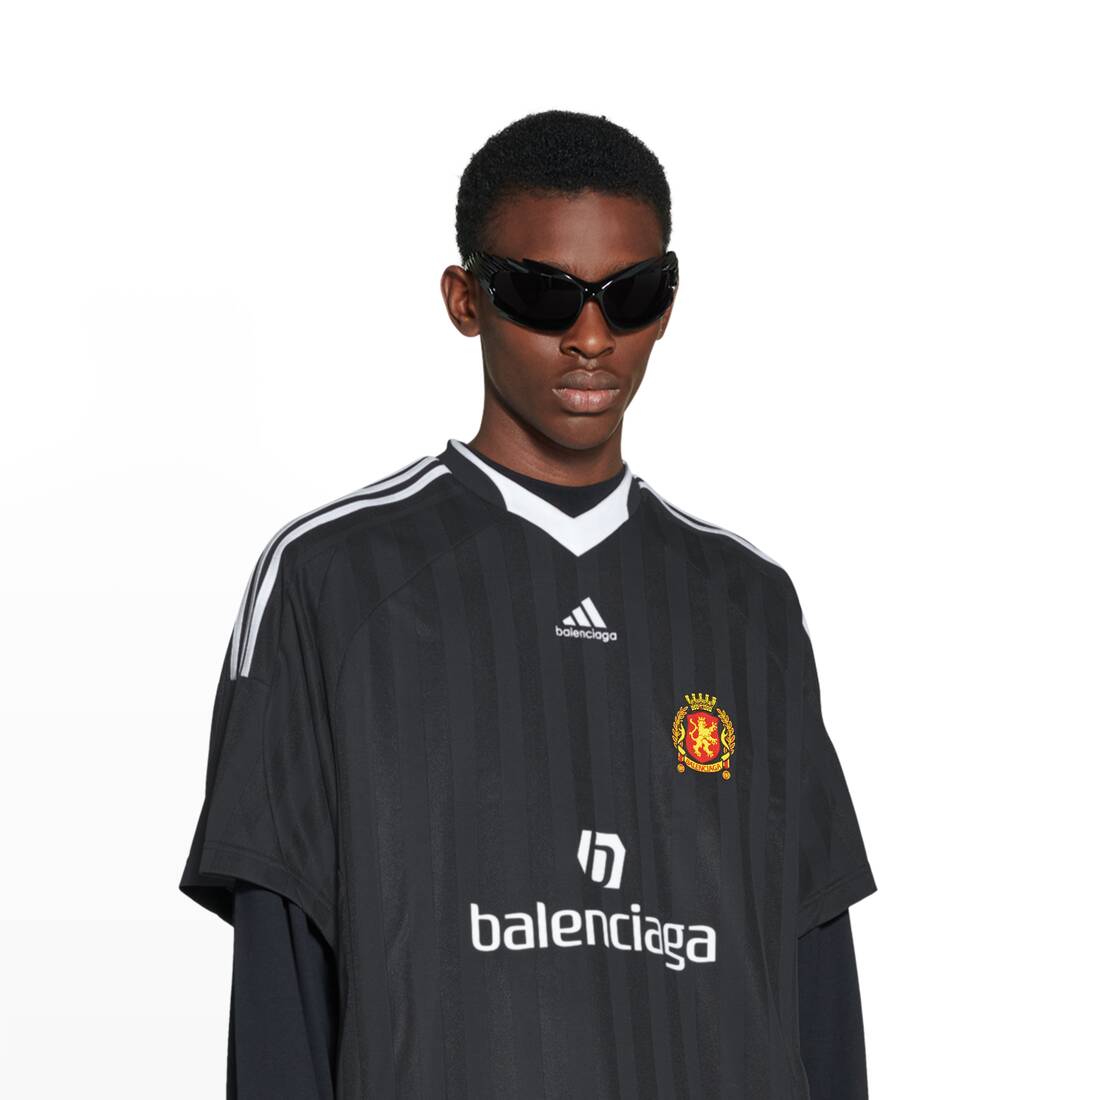 Balenciaga / Adidas Soccer T-shirt Oversized in Black